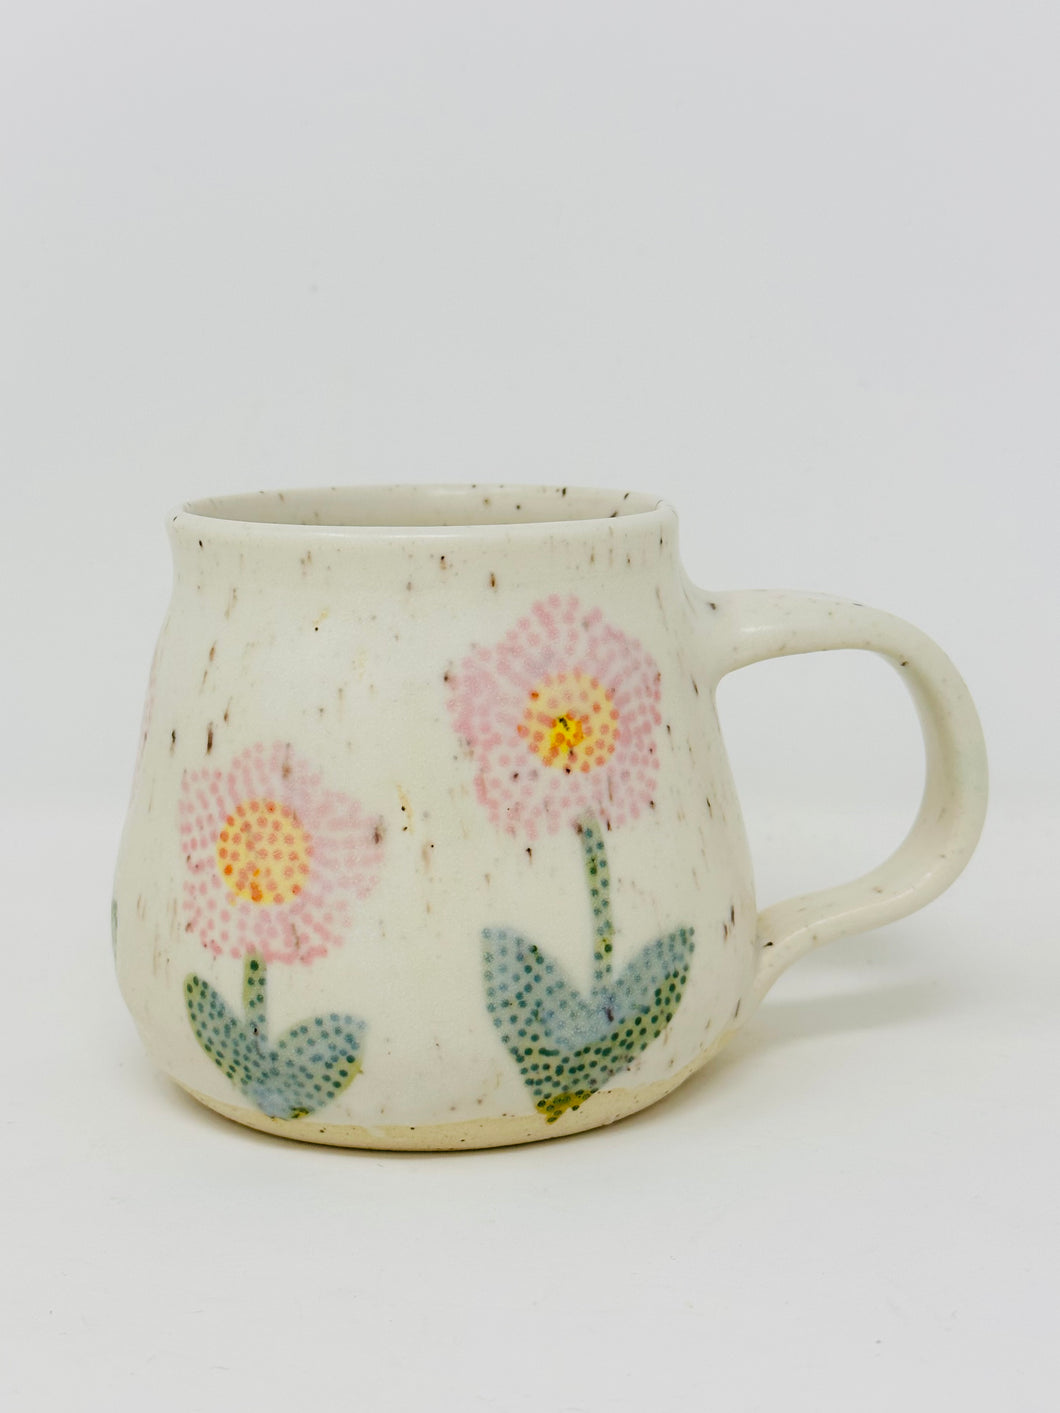 Handmade handpainted pink floral ceramic mug